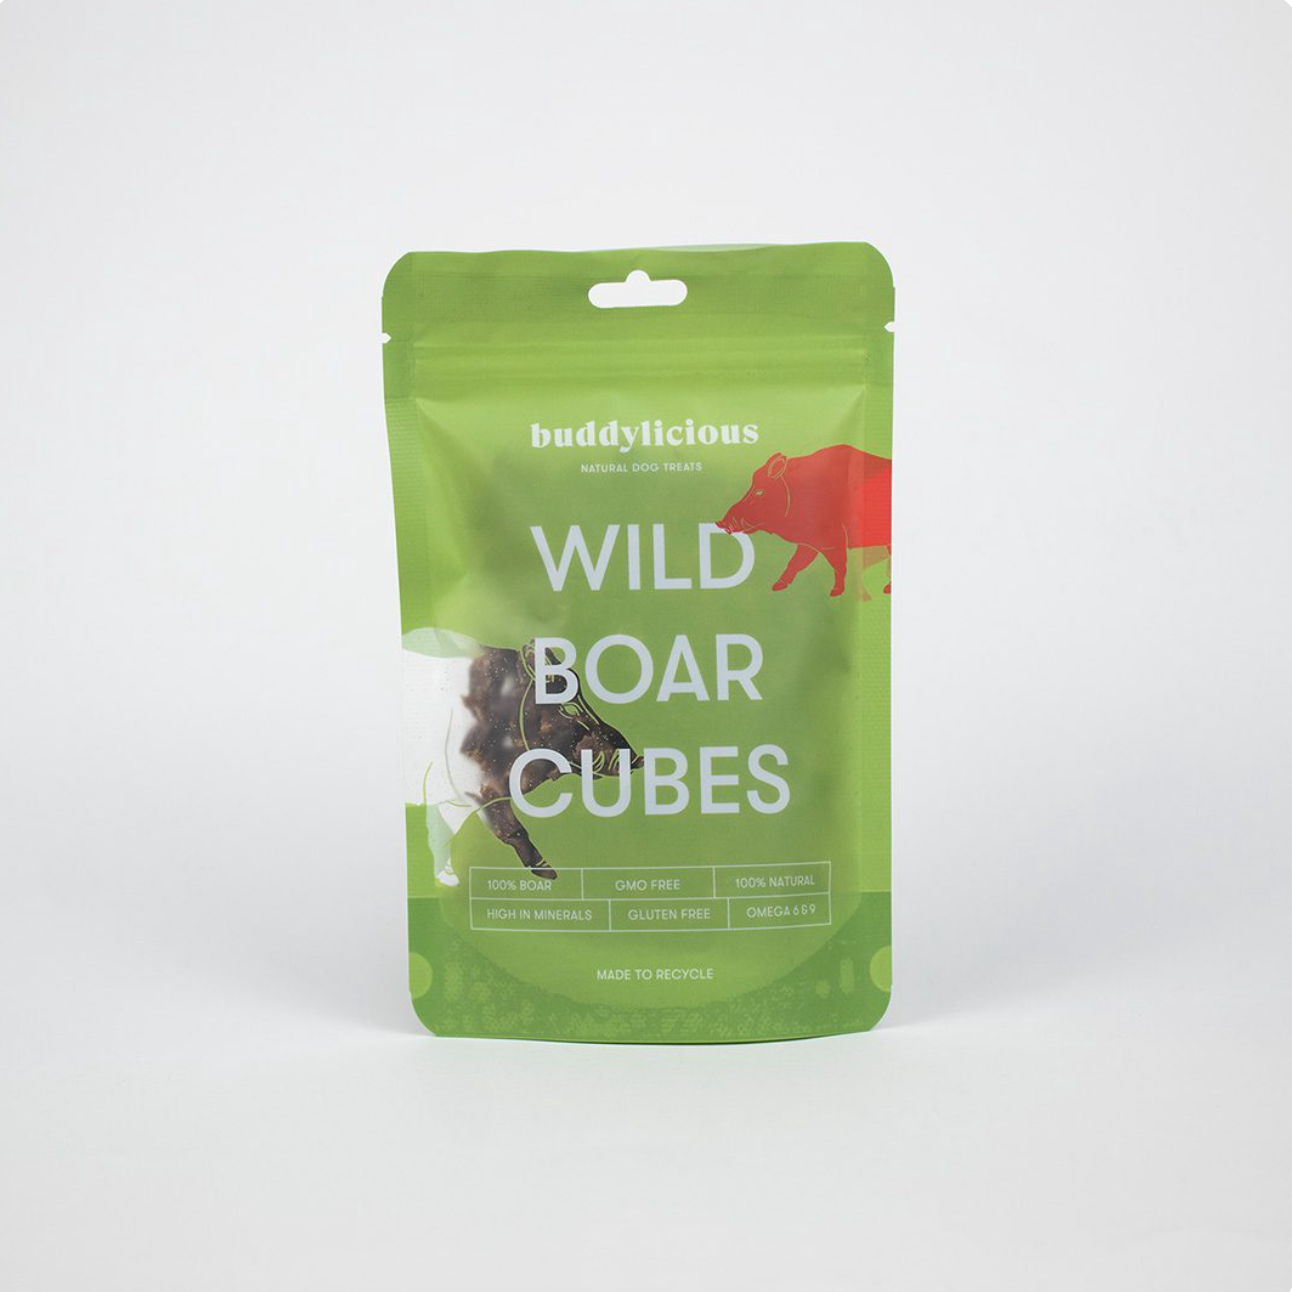 Buddylicious 100% Natural Wild Boar Cubes Dog Treats